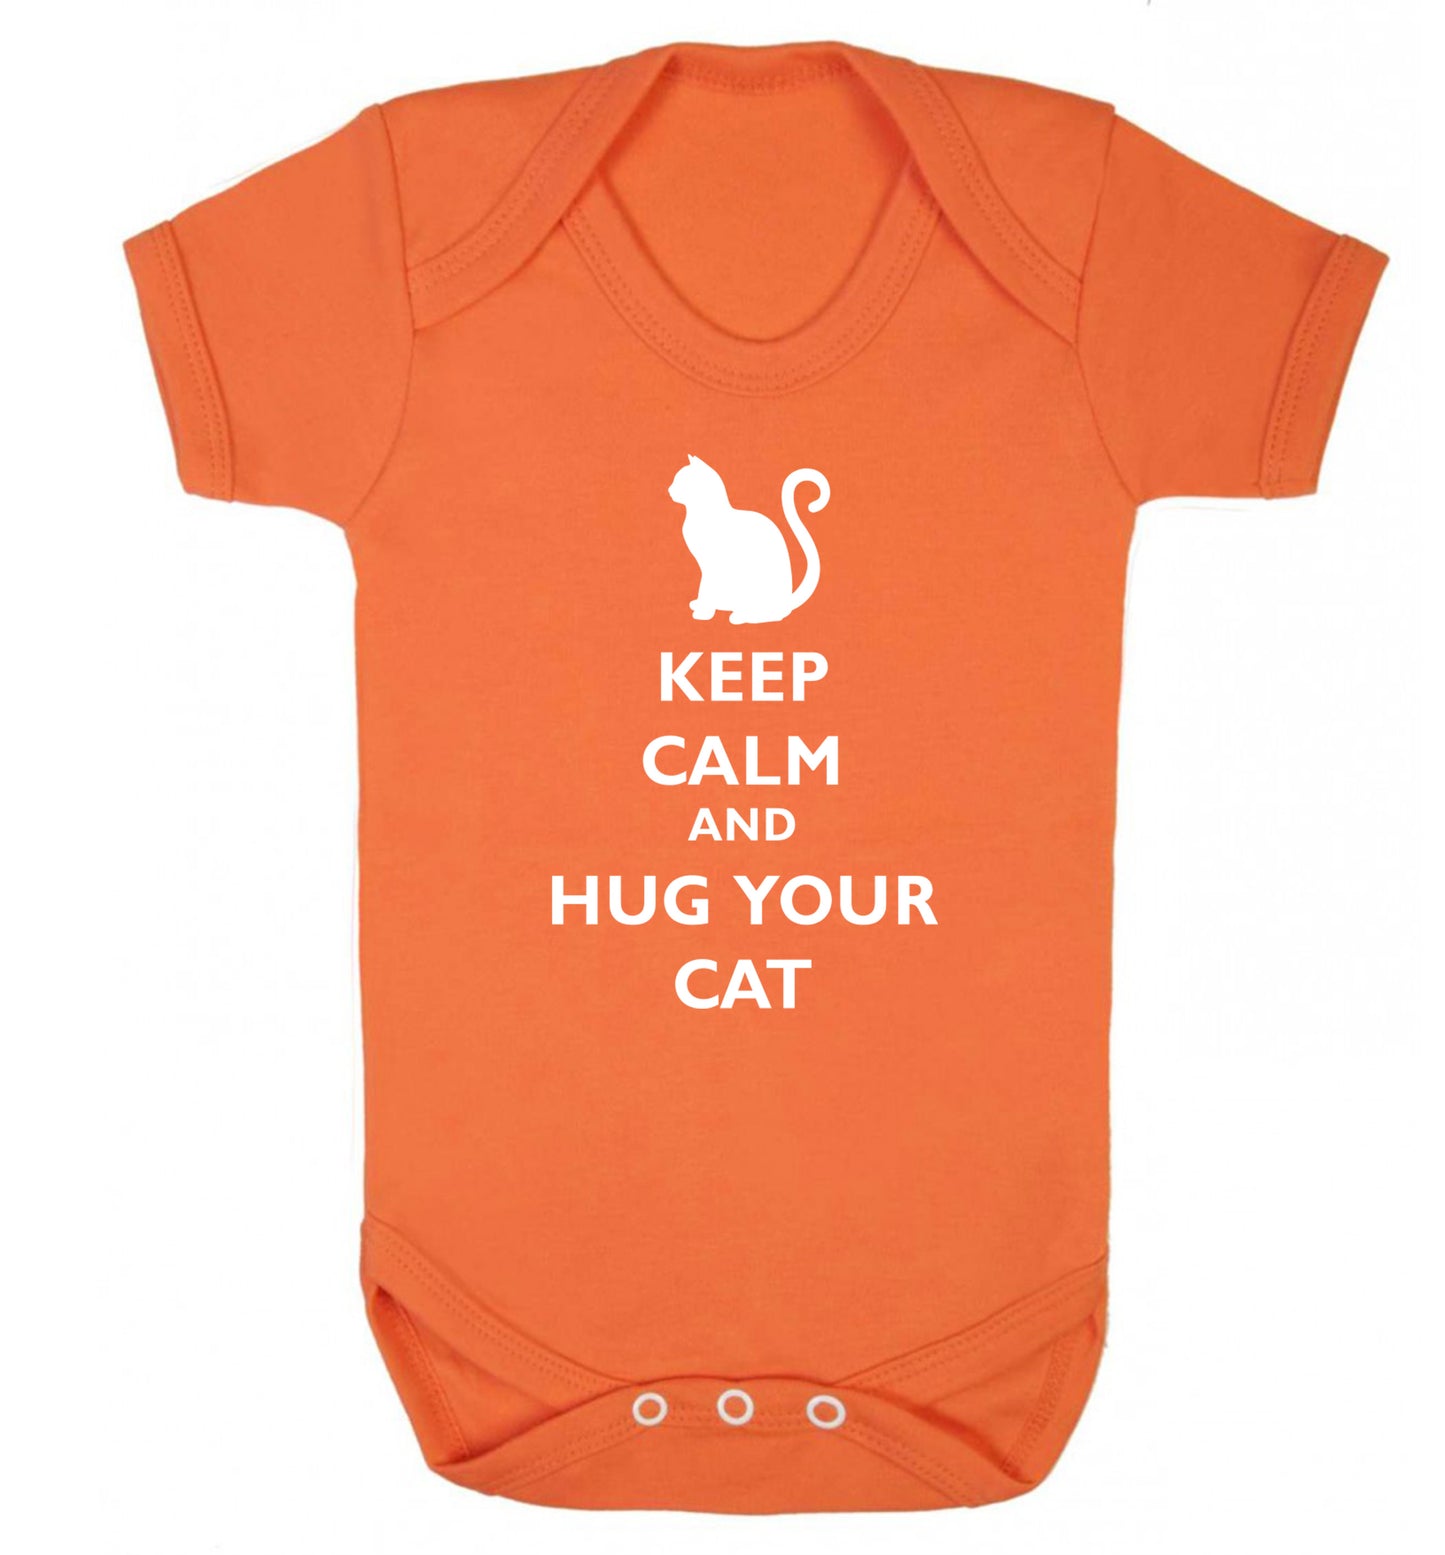 Keep calm and hug your cat Baby Vest orange 18-24 months